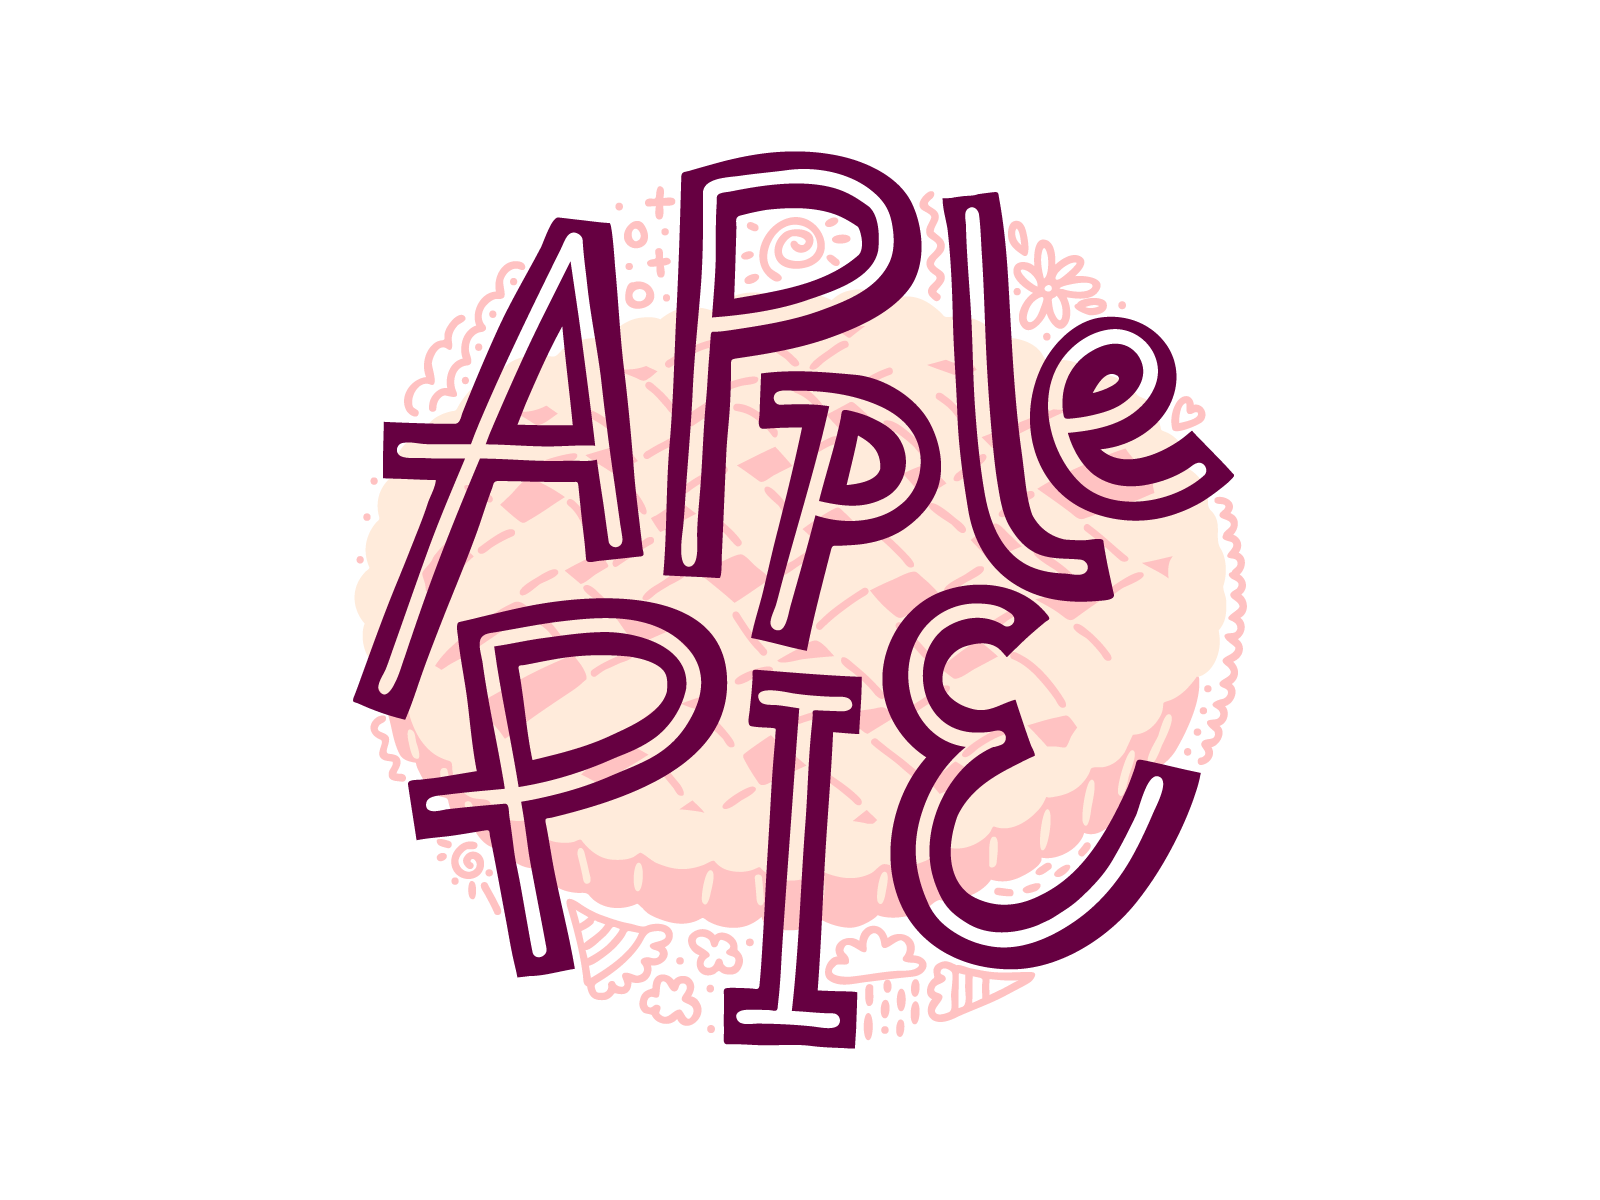 Apple Pie by Natalia Mikhaleva on Dribbble